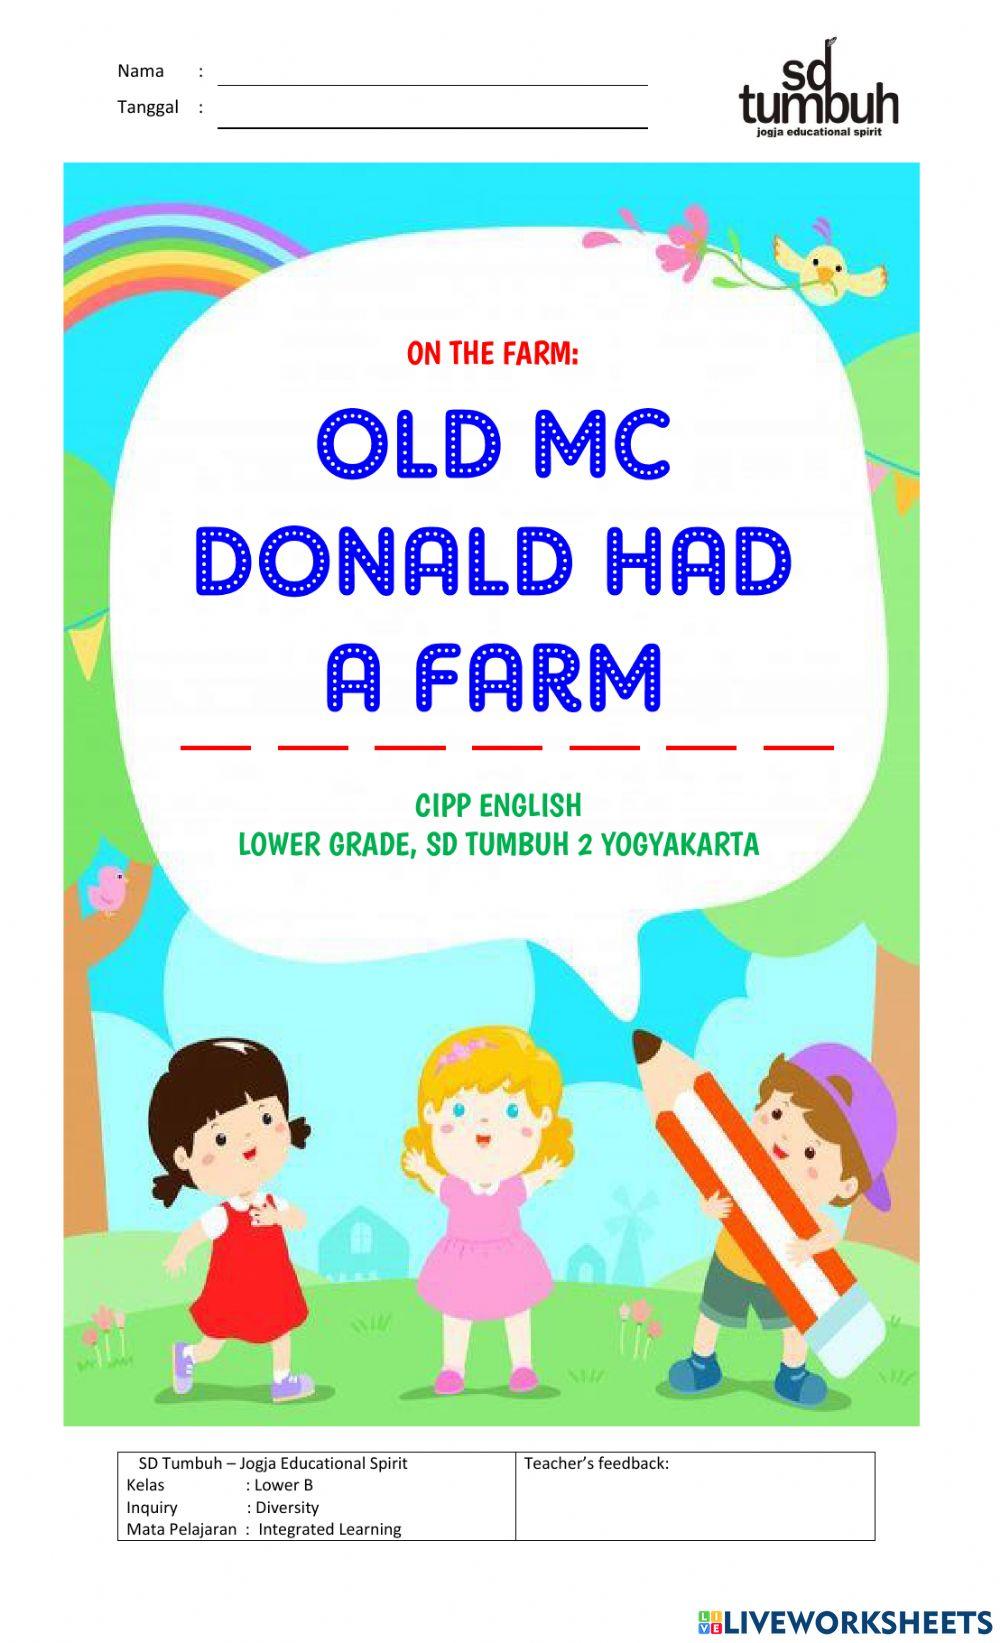 ON THE FARM : Old McDonald